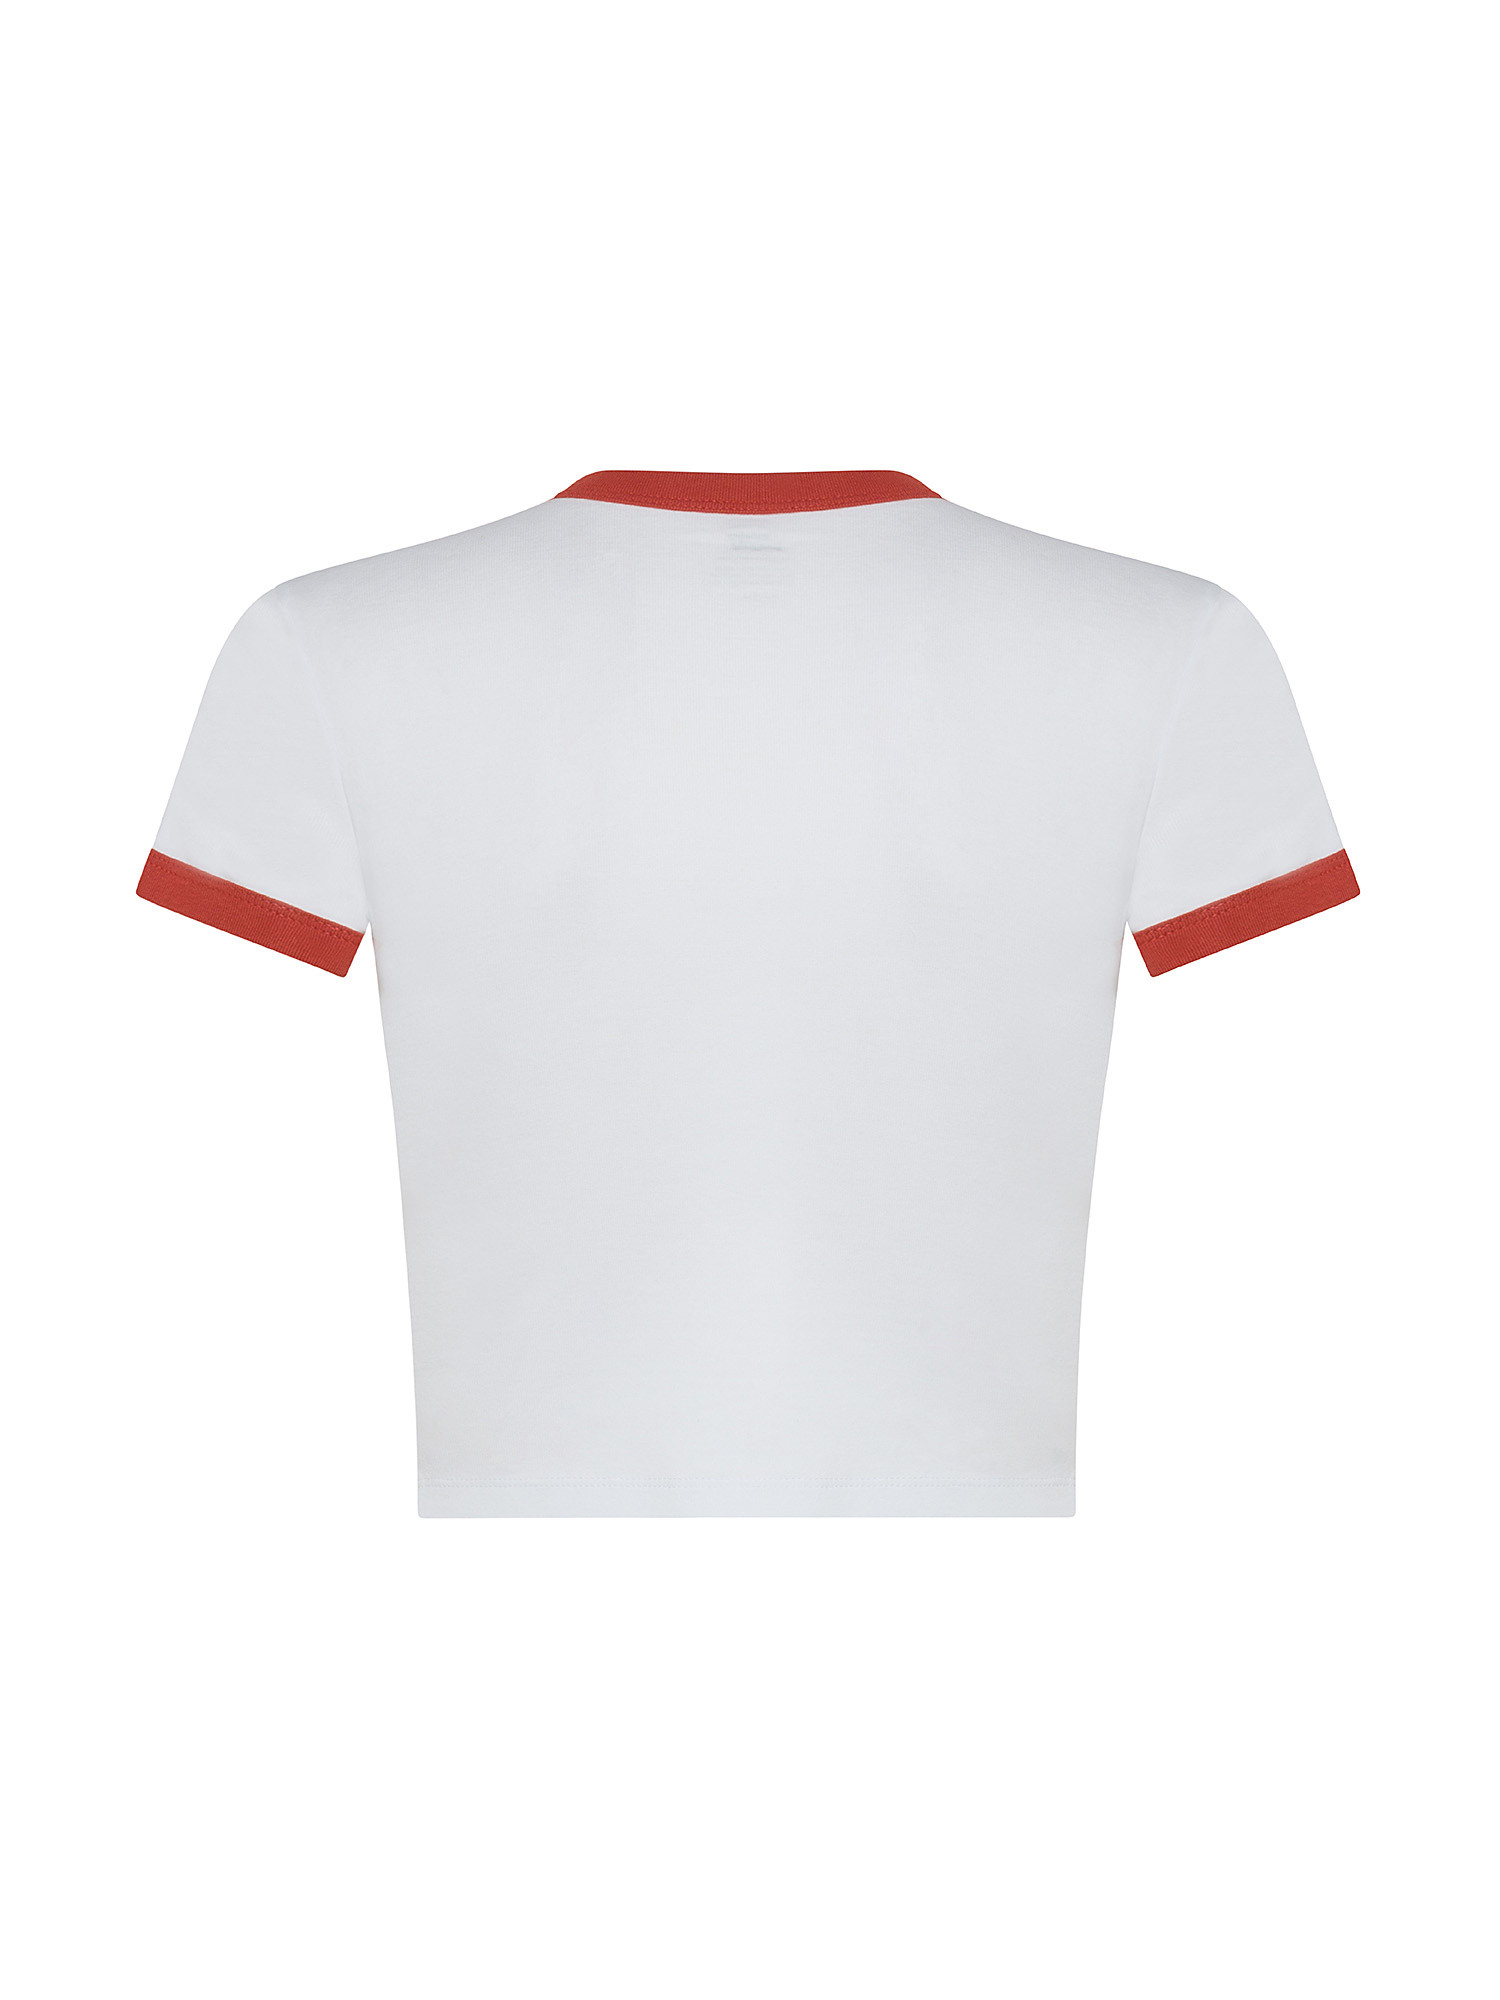 Levi's - ringer mini printed t-shirt, Red, large image number 1